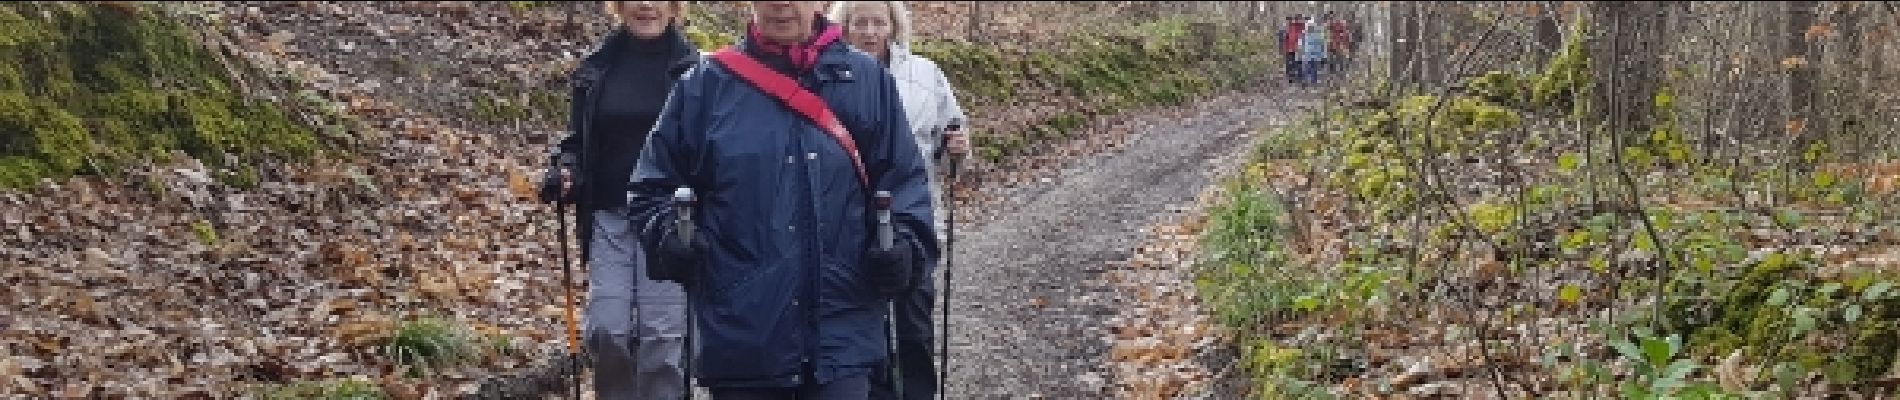 Trail Walking Le Tremblay-sur-Mauldre - rando du 23/03/2017 - Photo